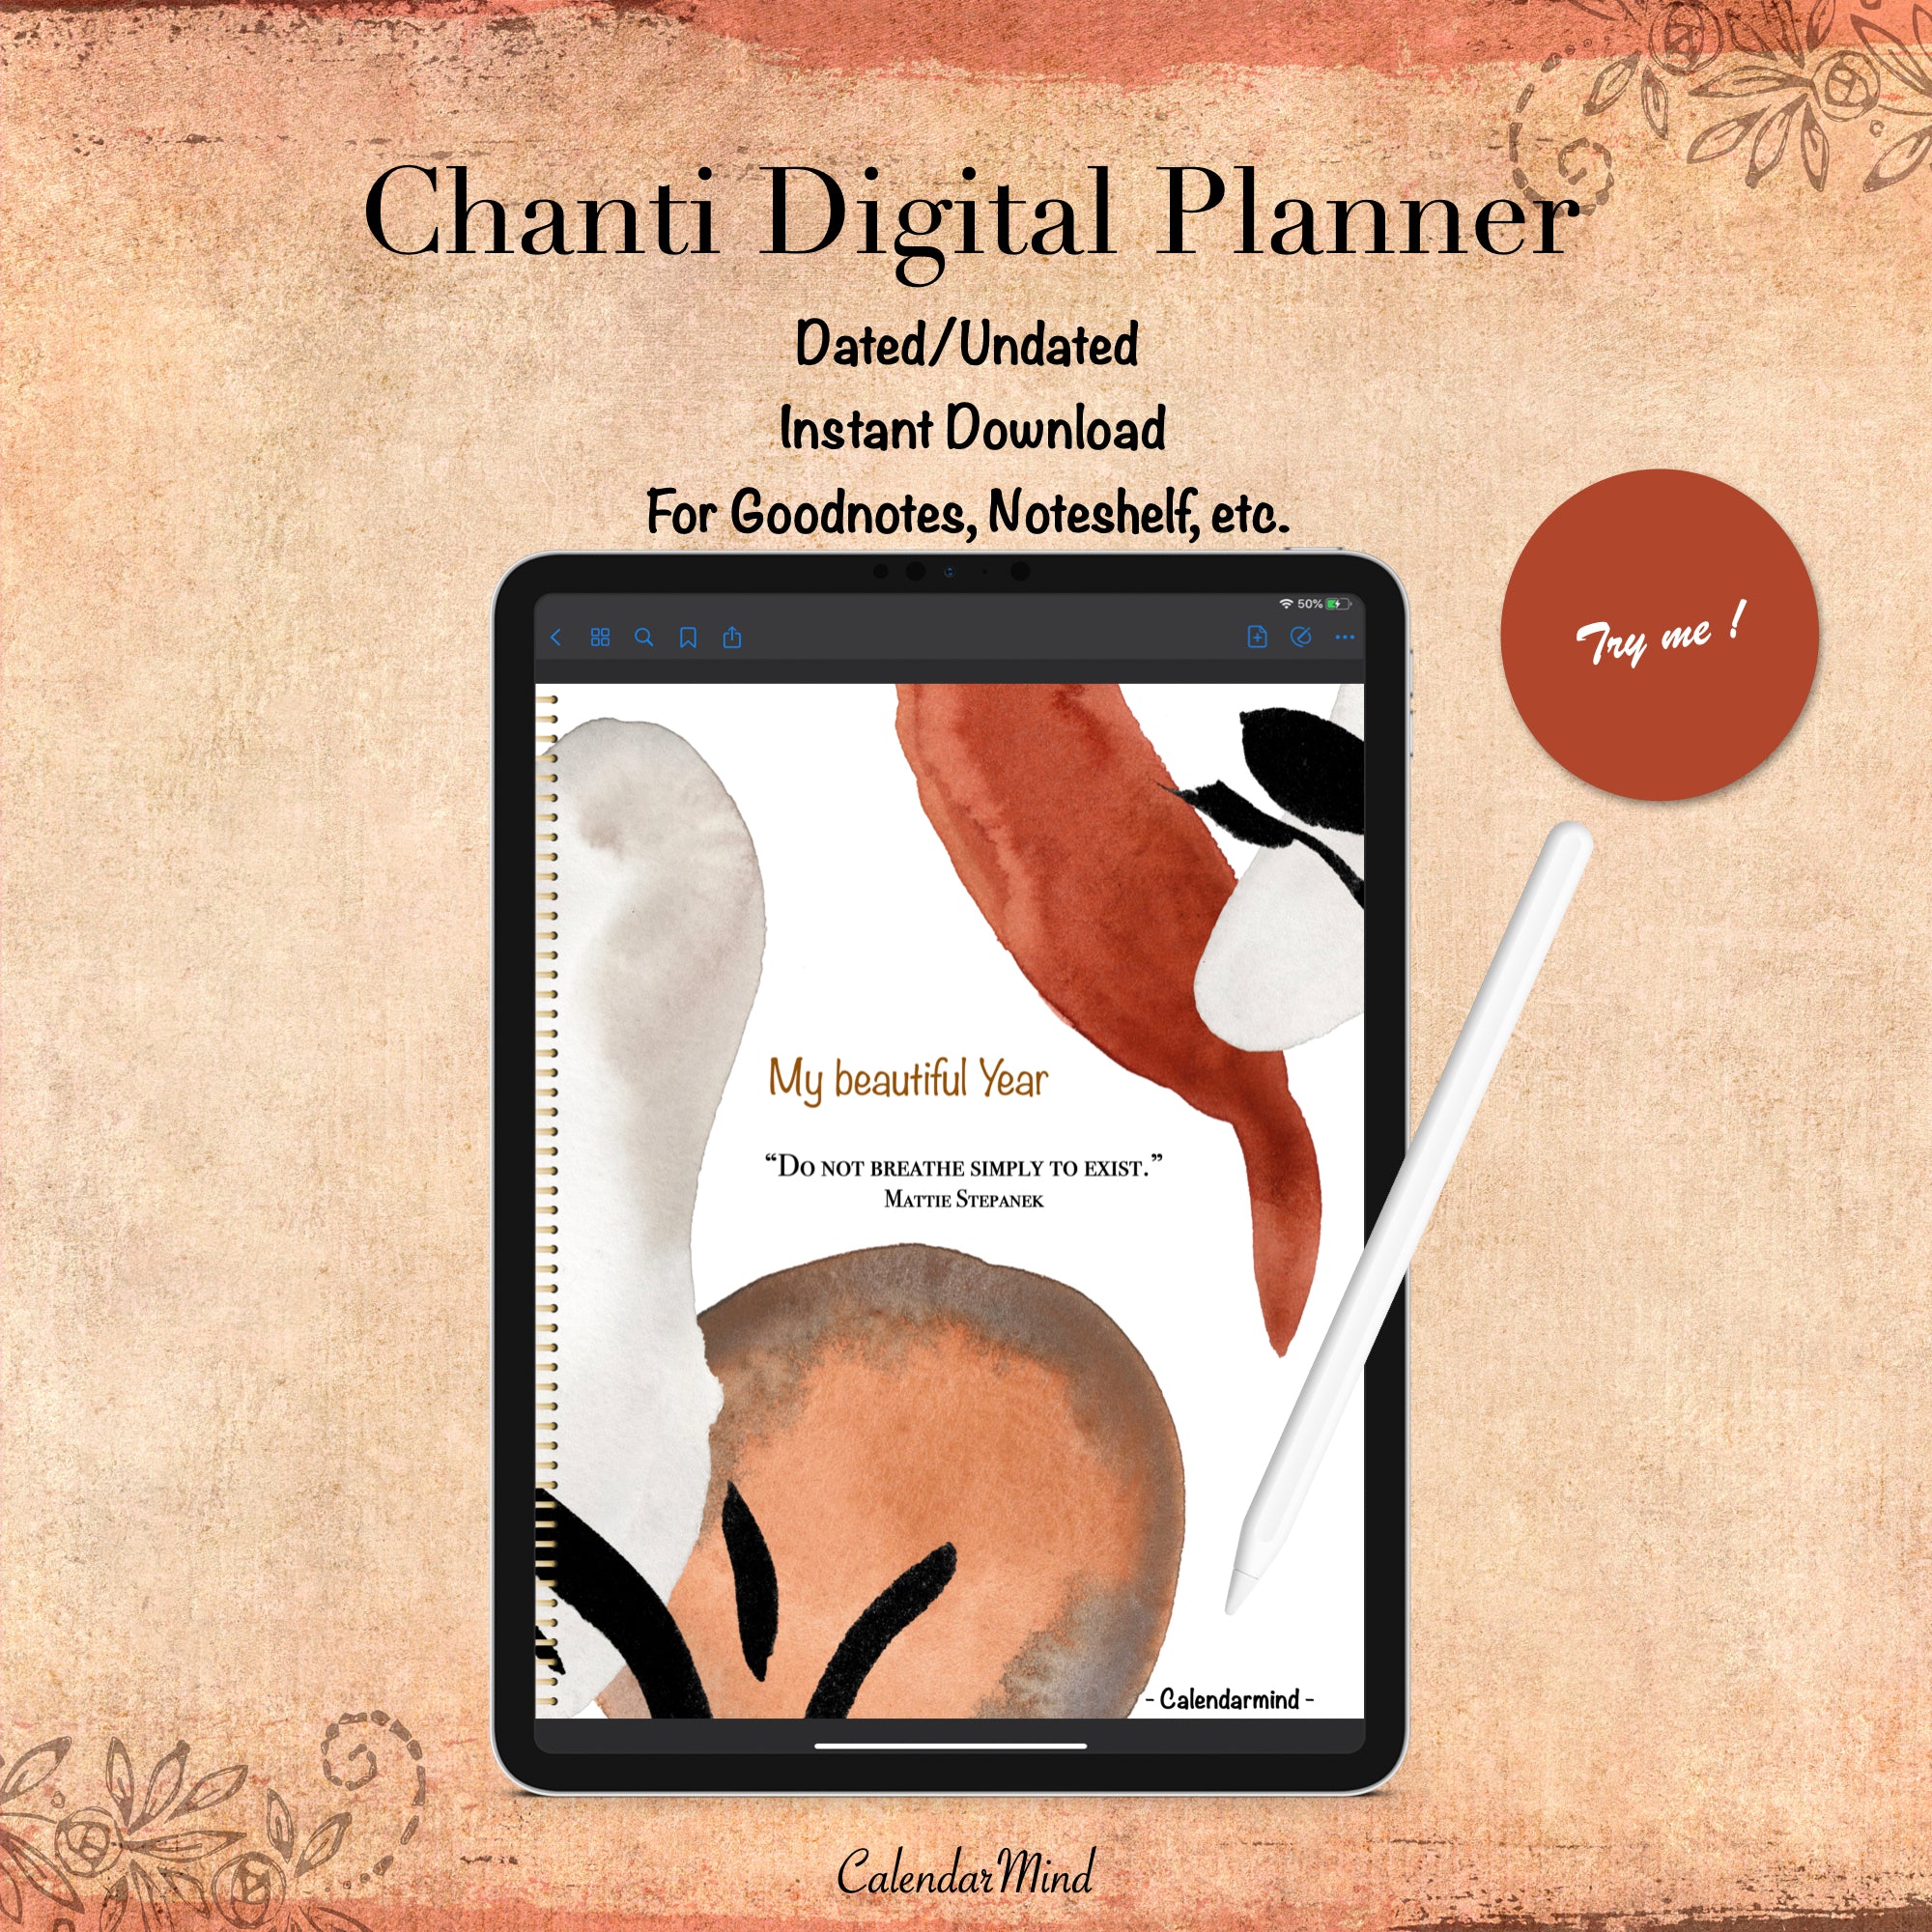 Chanti Digital Planner